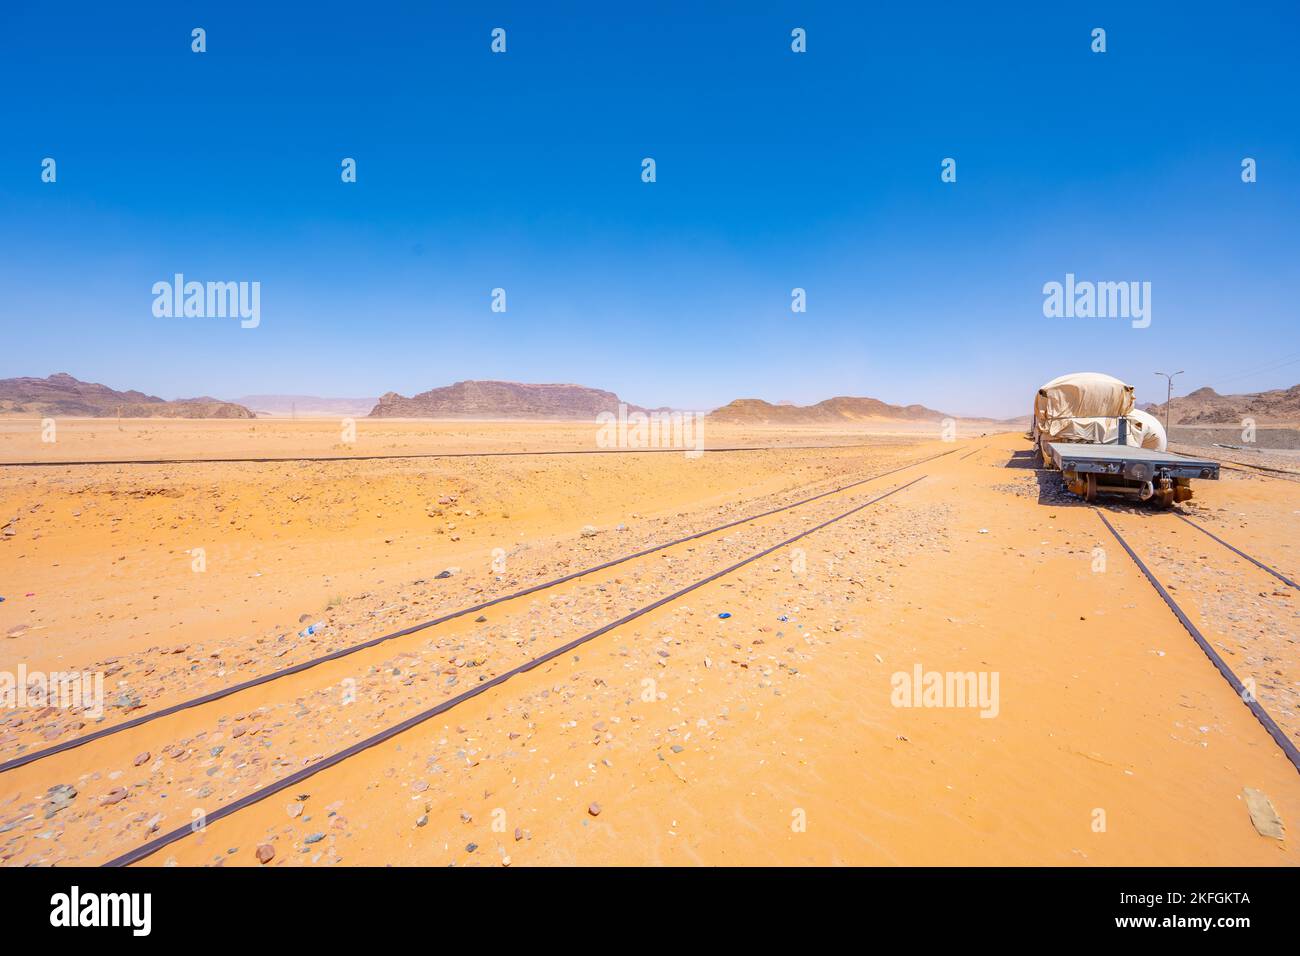 The sand buried train track at Wadi Rum Train Station in Wadi Rum Jordan Stock Photo